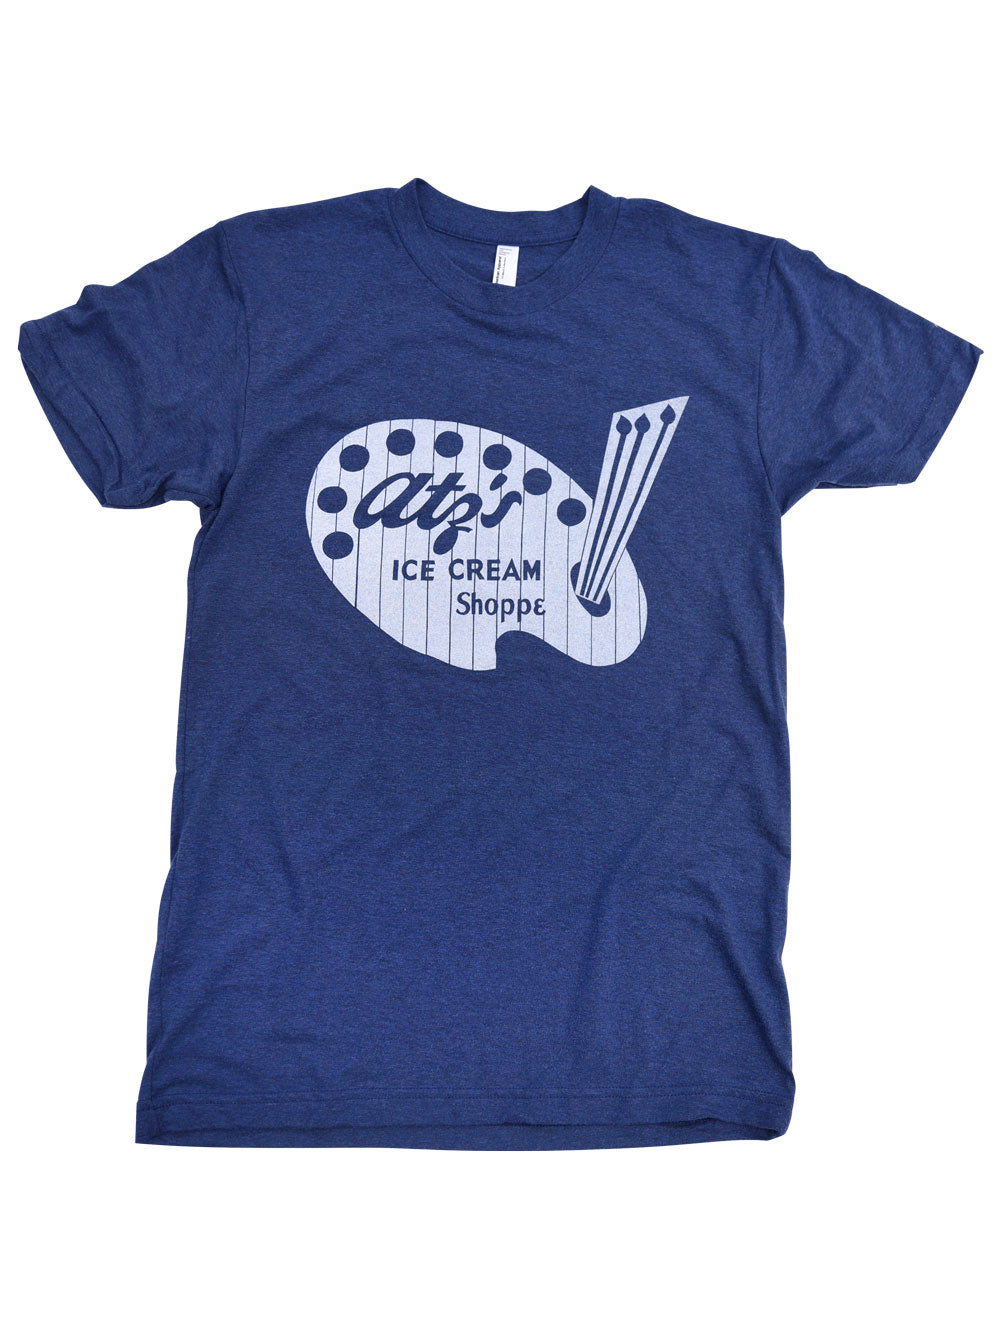 Atz's Ice Cream Shoppe Blue T-shirt with logo